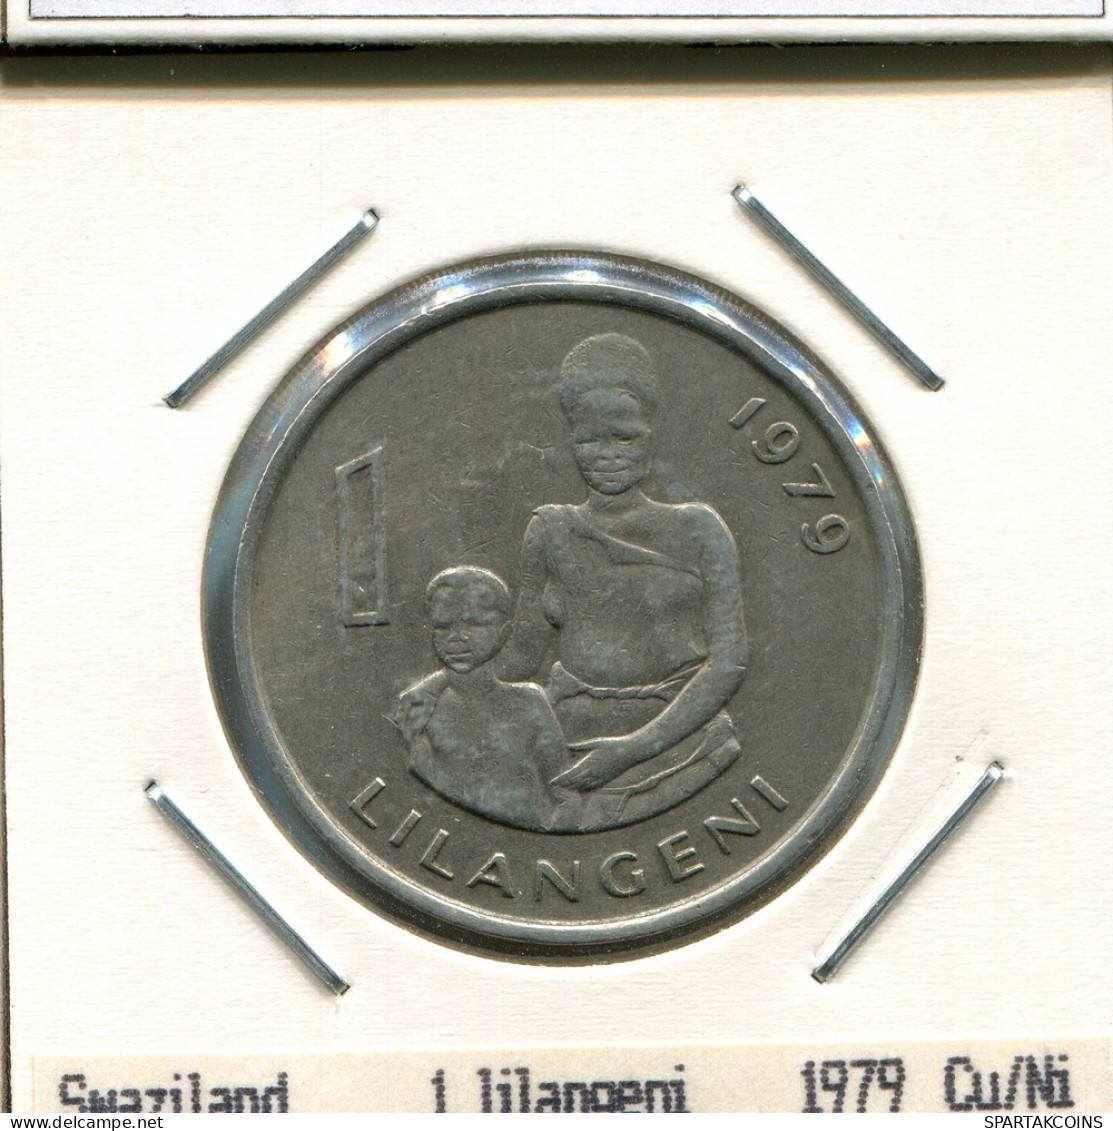 1 LILANGENI 1979 SWAZILANDIA SWAZILAND Moneda #AS307.E - Swaziland